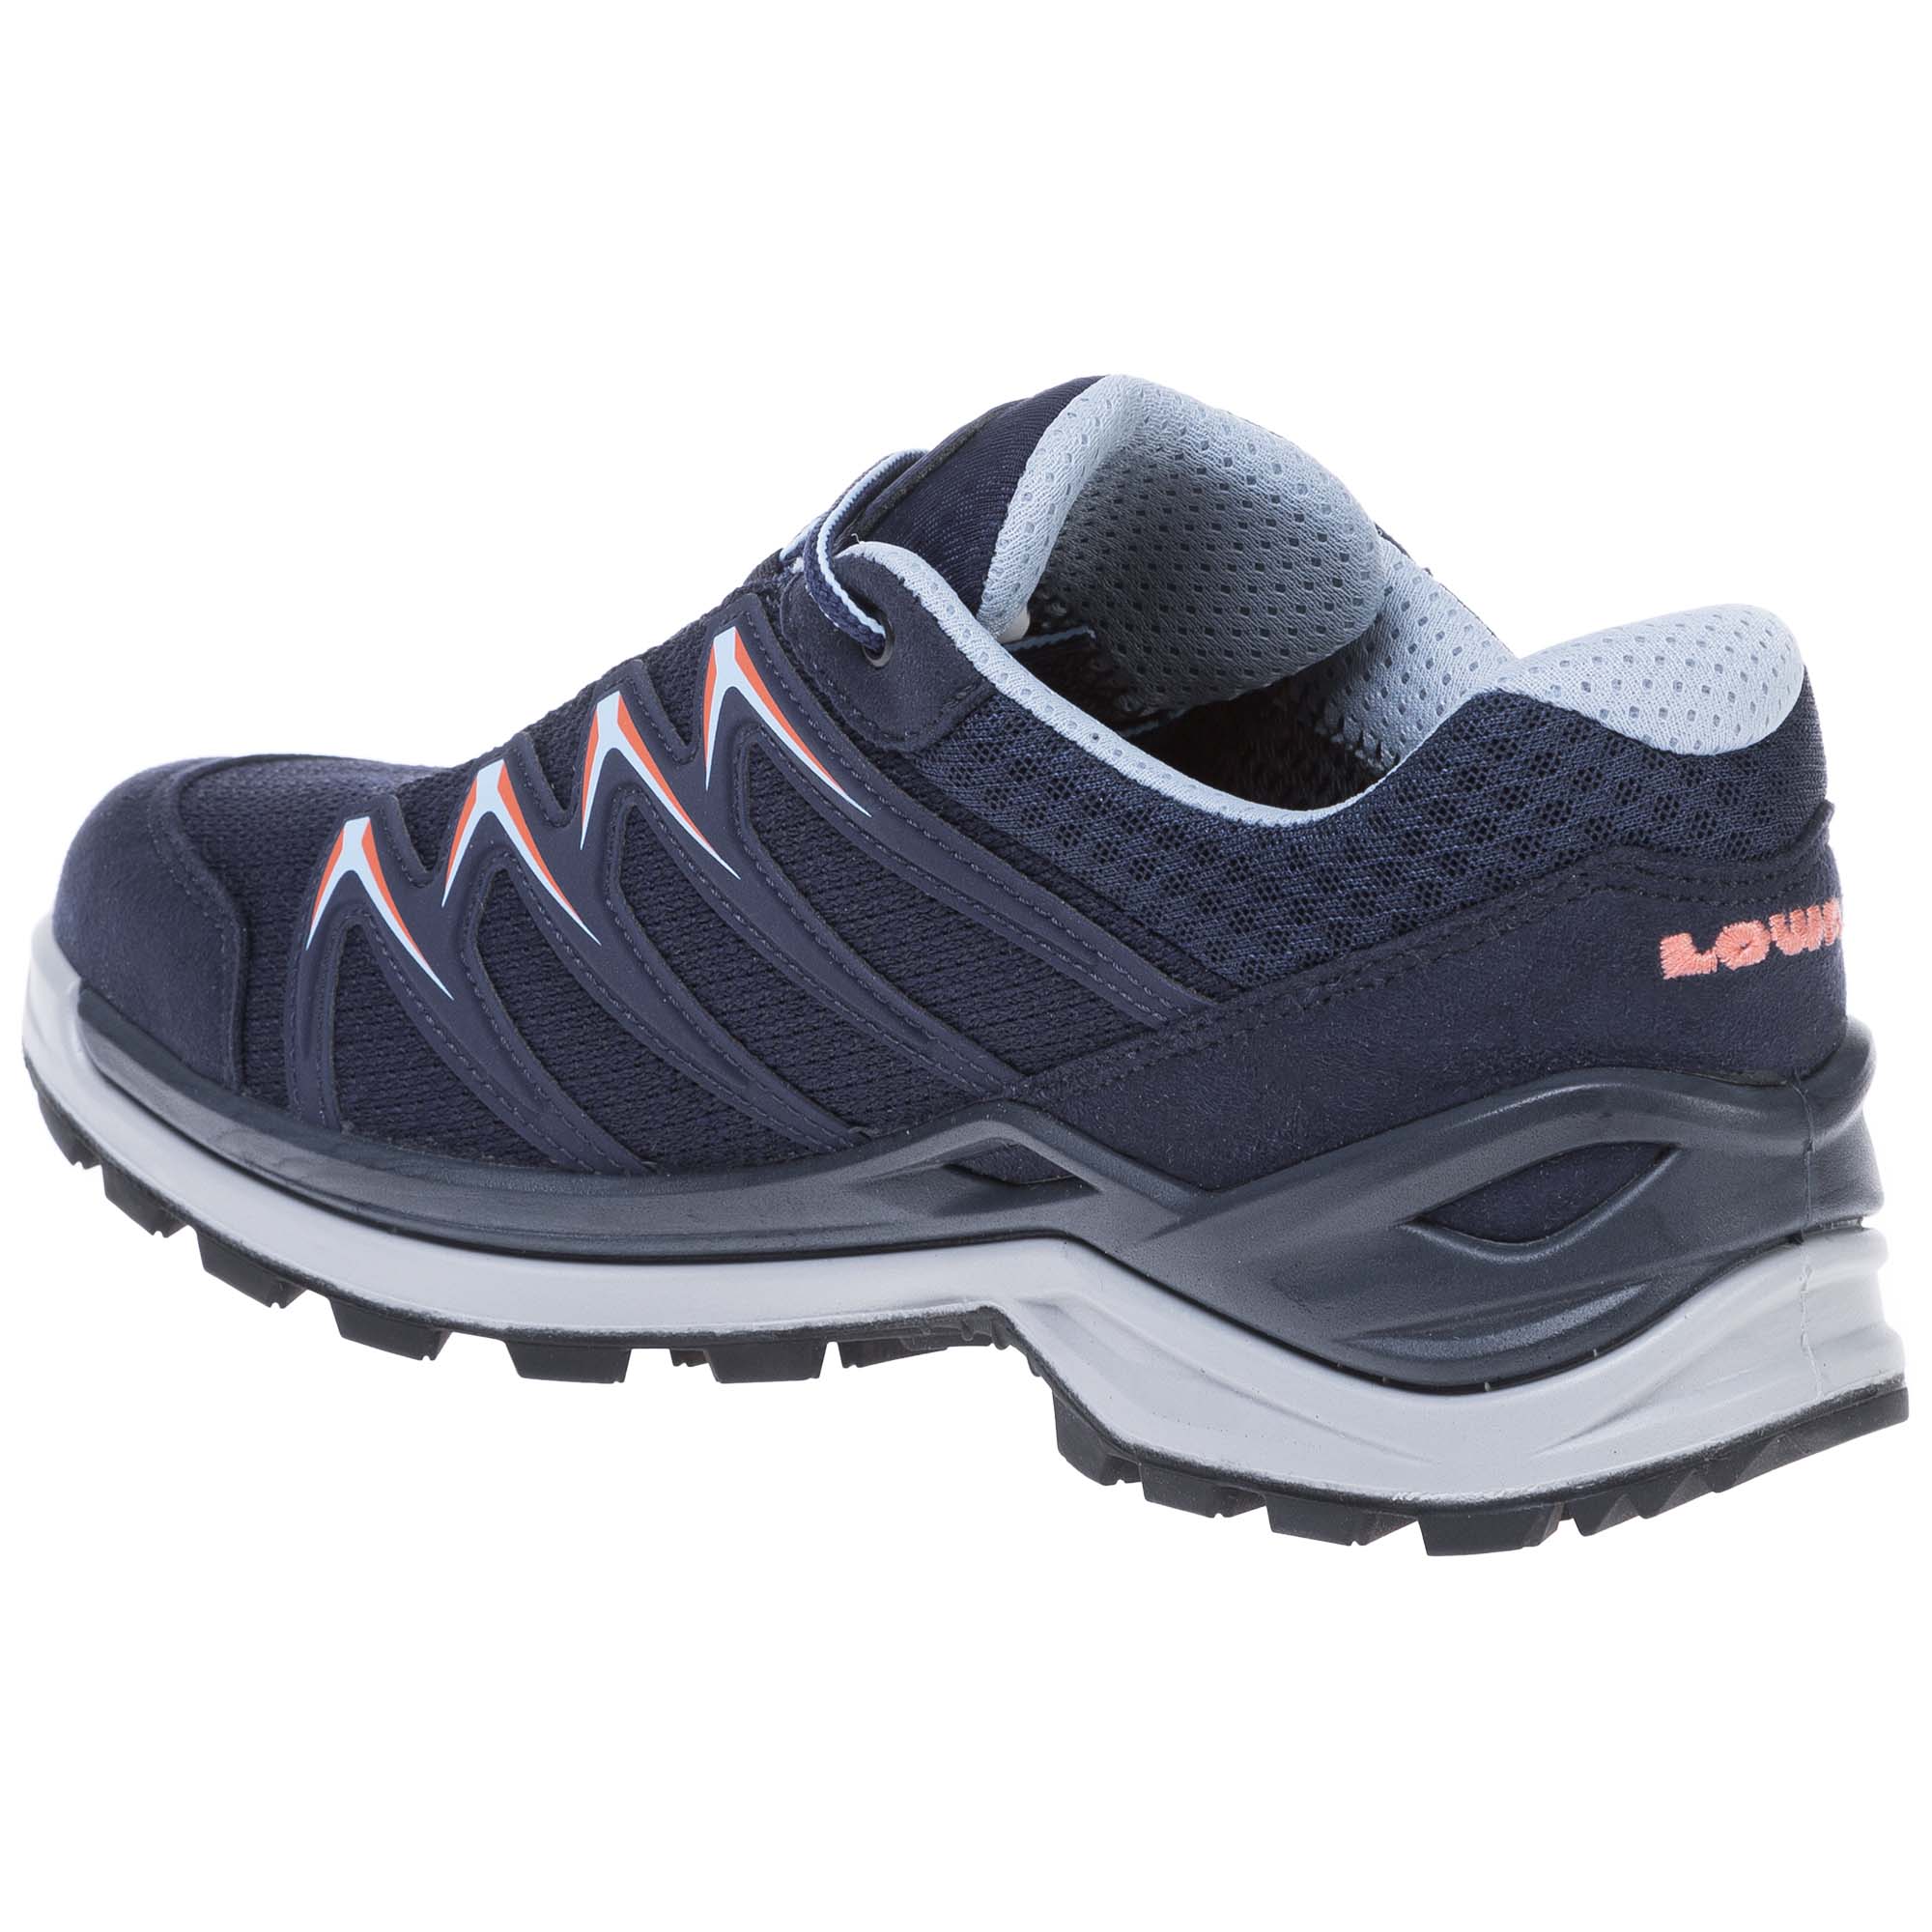 Lowa Innox Pro GTX Lo Women's Hiking Shoes